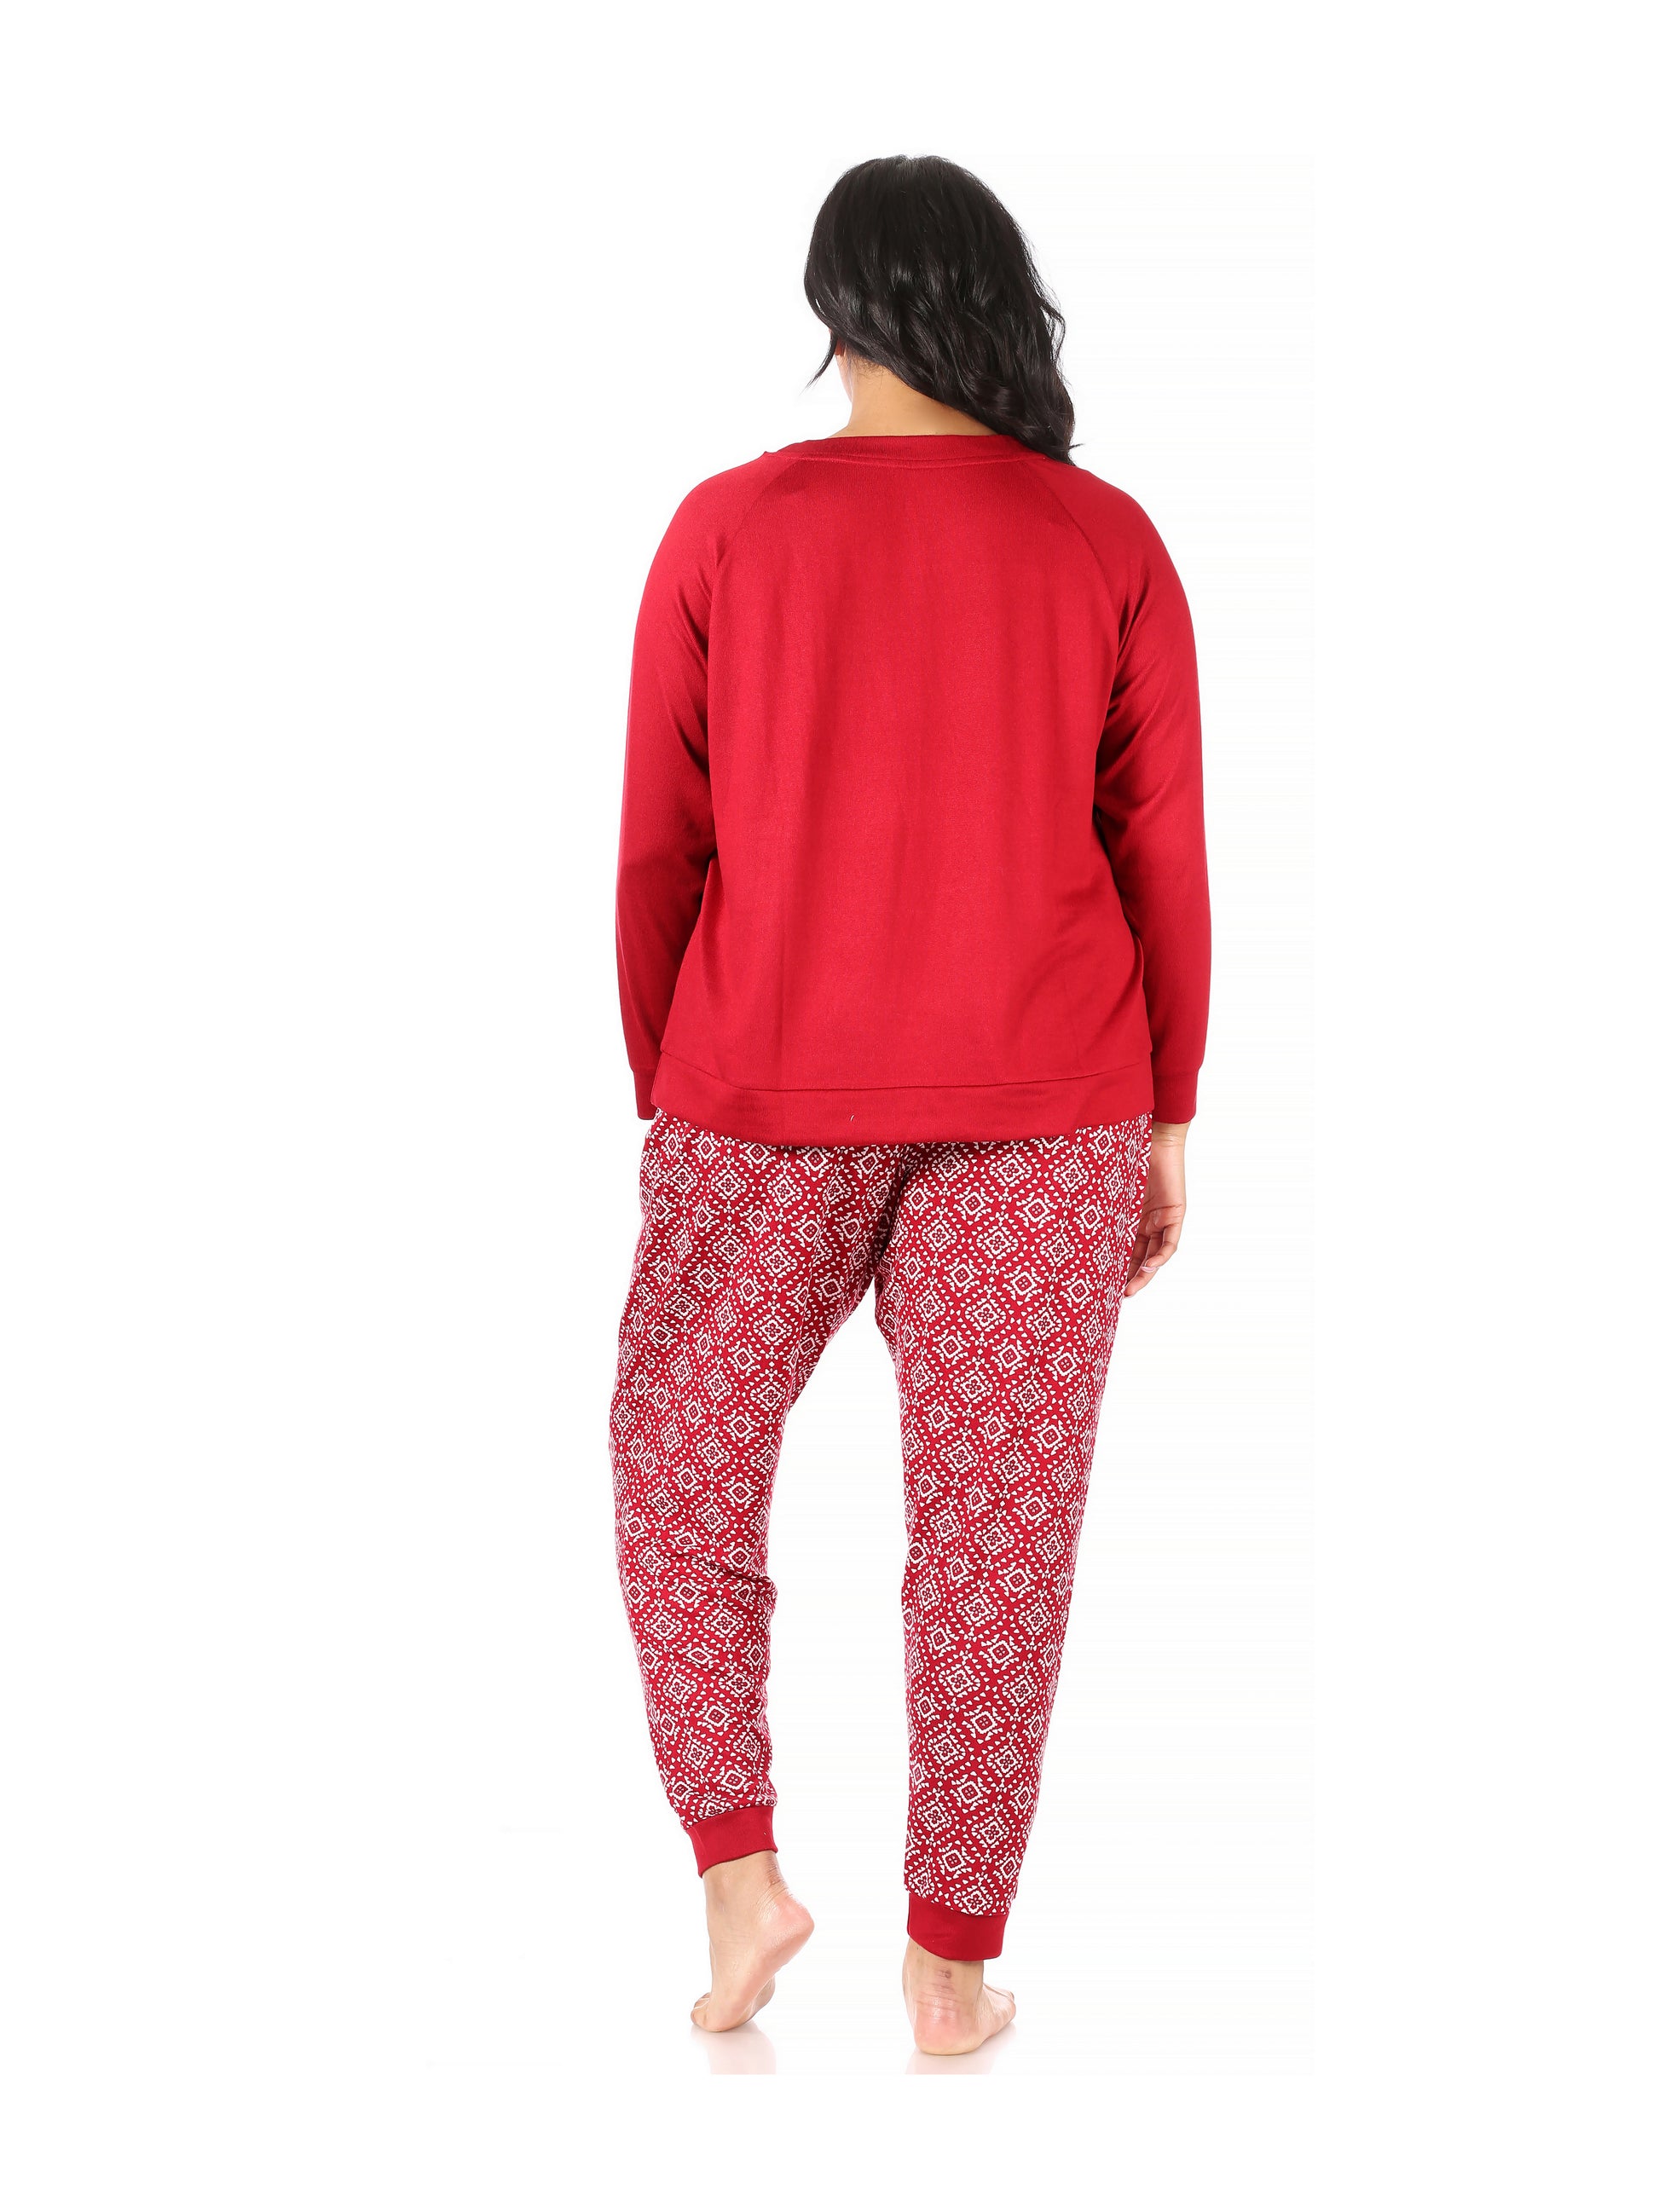 Women's "HO HO HO" Plus Size Hacci Long Sleeve Top and Jogger Pajama Set - Rae Dunn Wear - W Pants Set